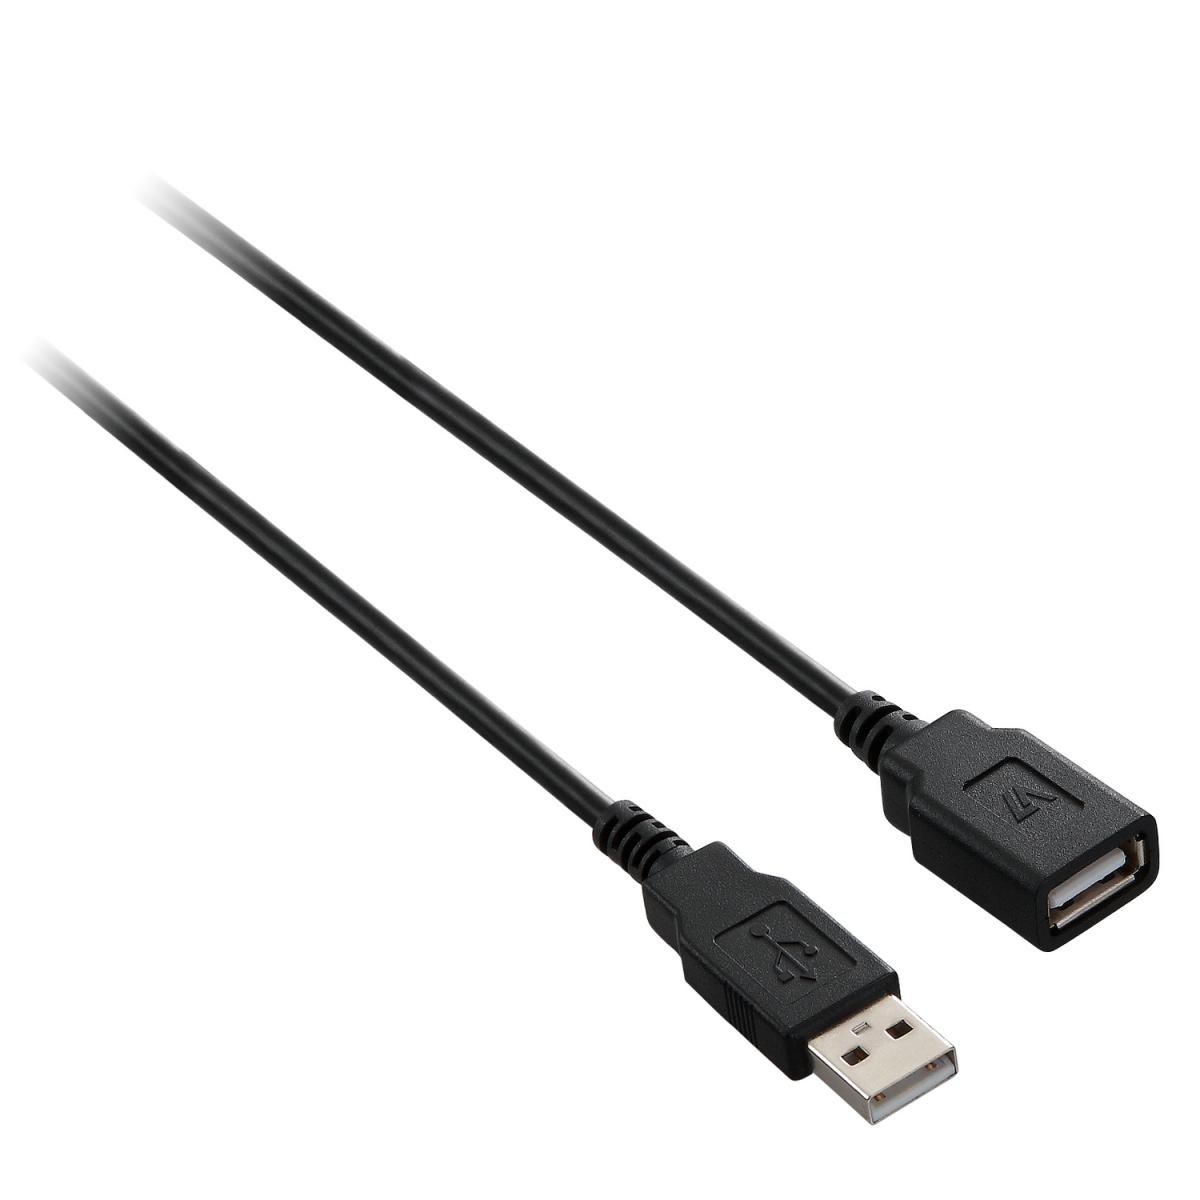 V7 - V7 CABLE USB M/F NOIR 3M - Câble antenne